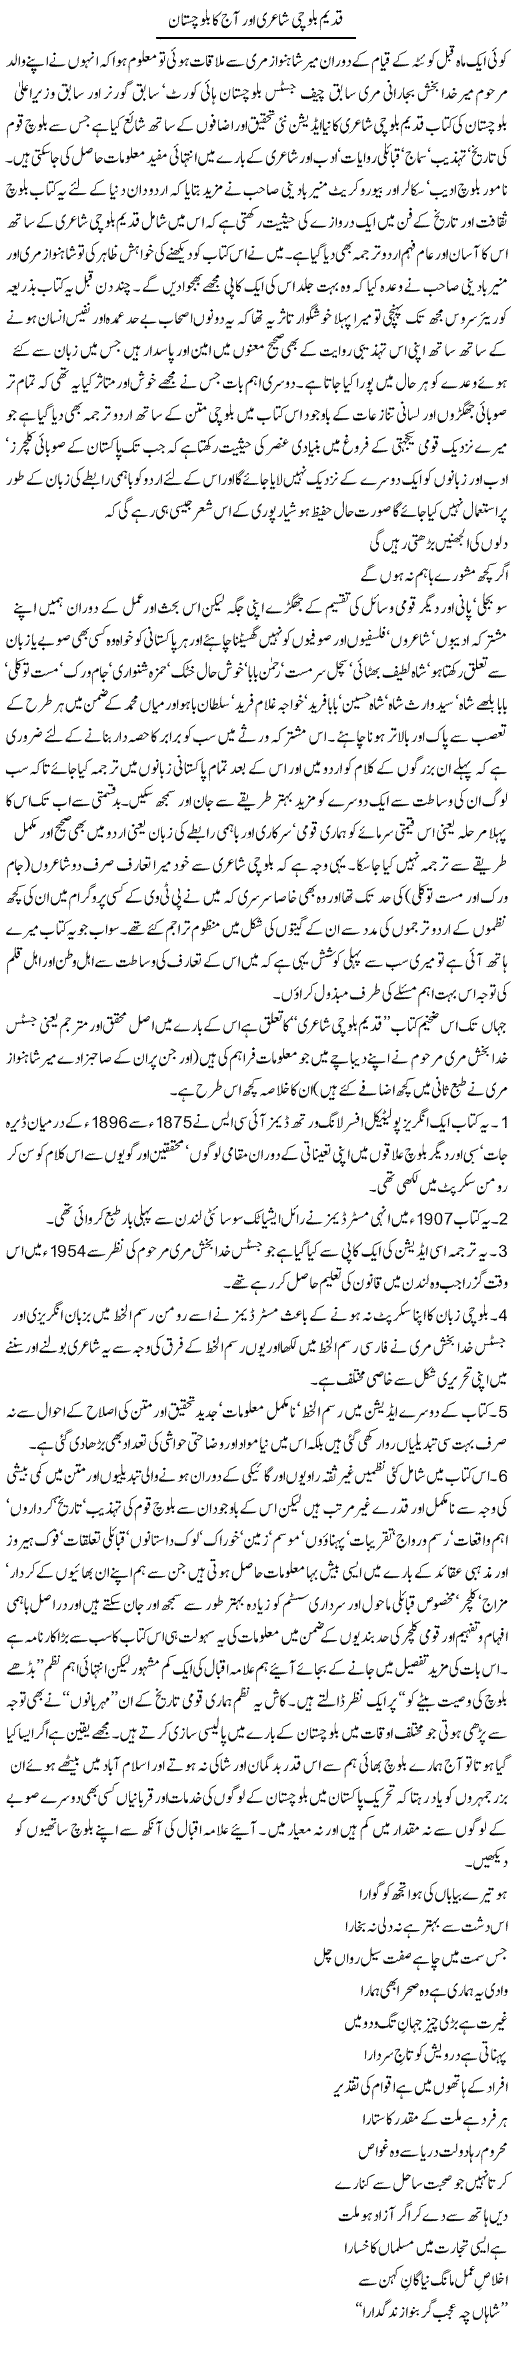 Balochi Shairi Express Column Amjad Islam 5 August 2010